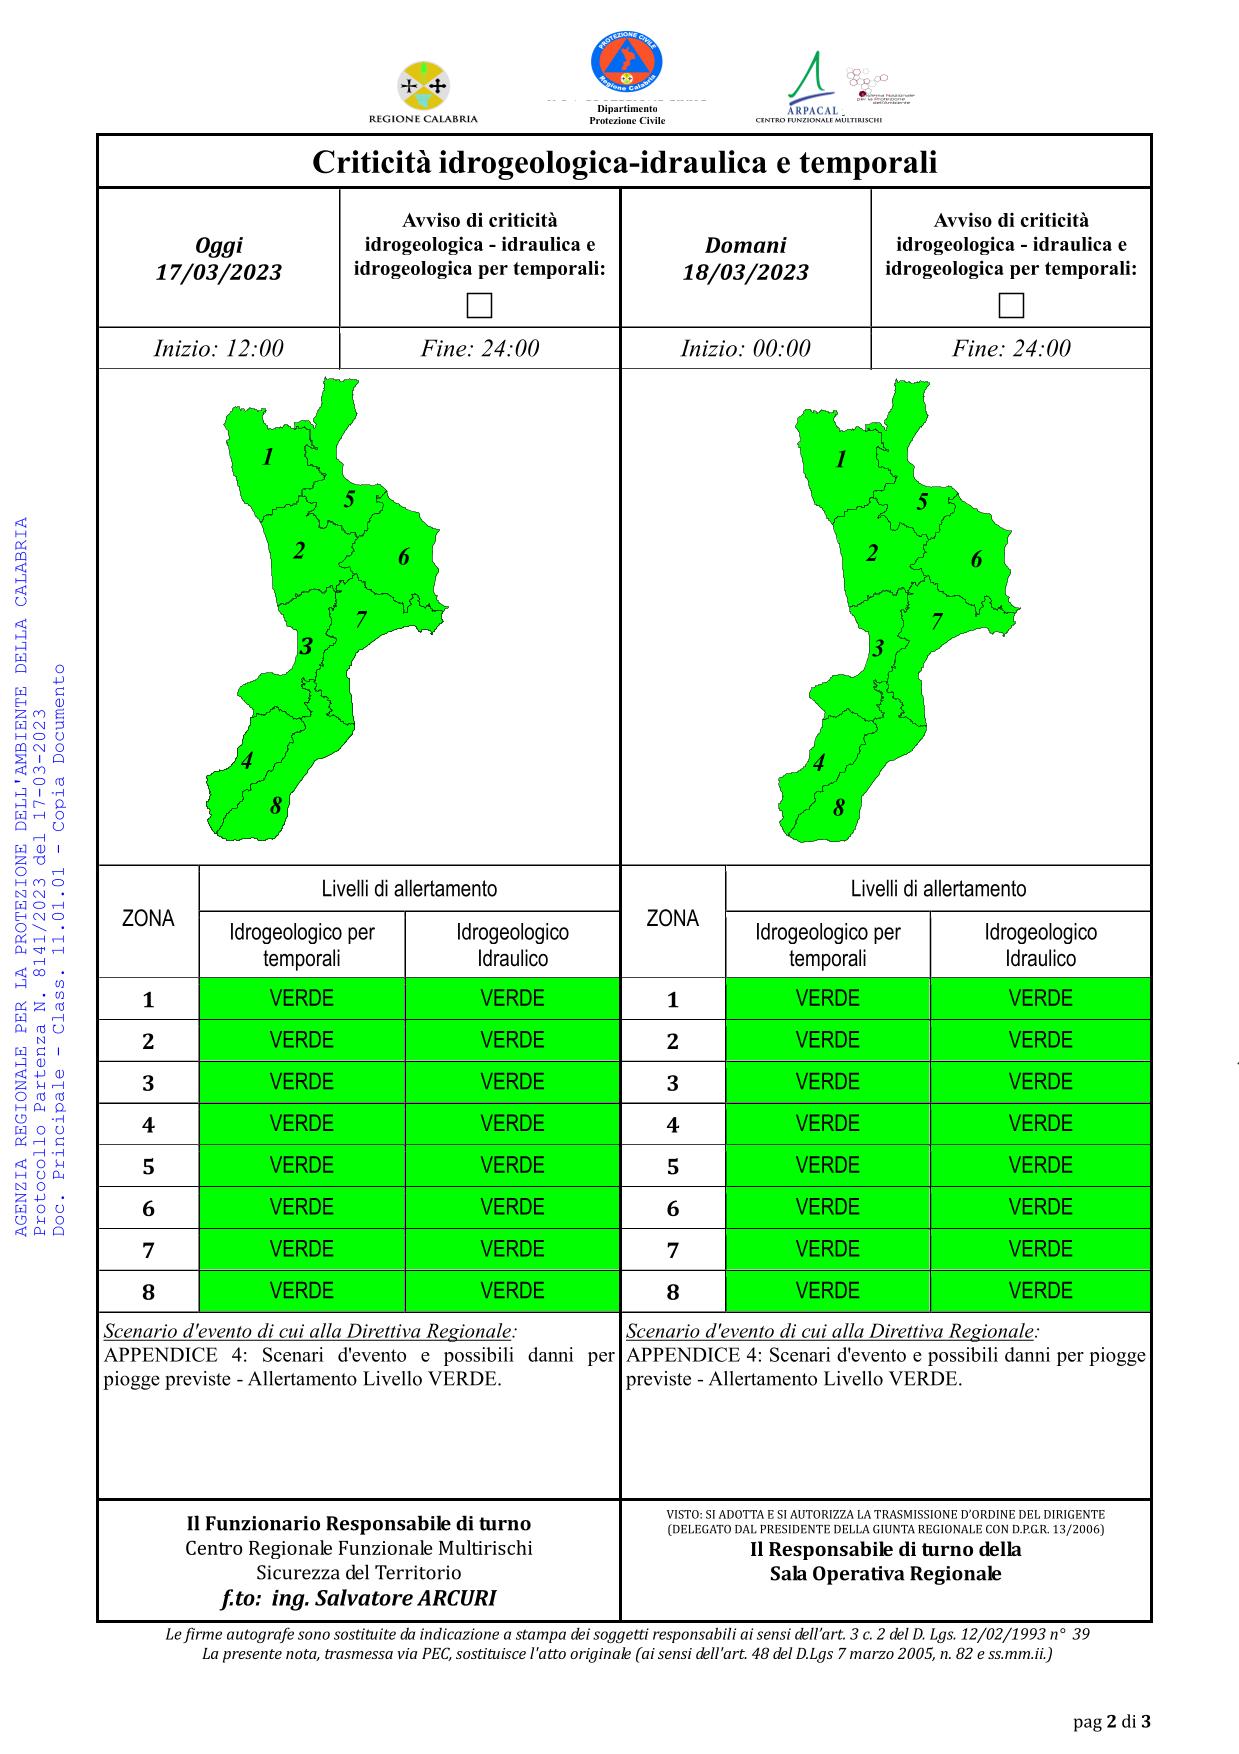 Criticità idrogeologica-idraulica e temporali in Calabria 17-03-2023